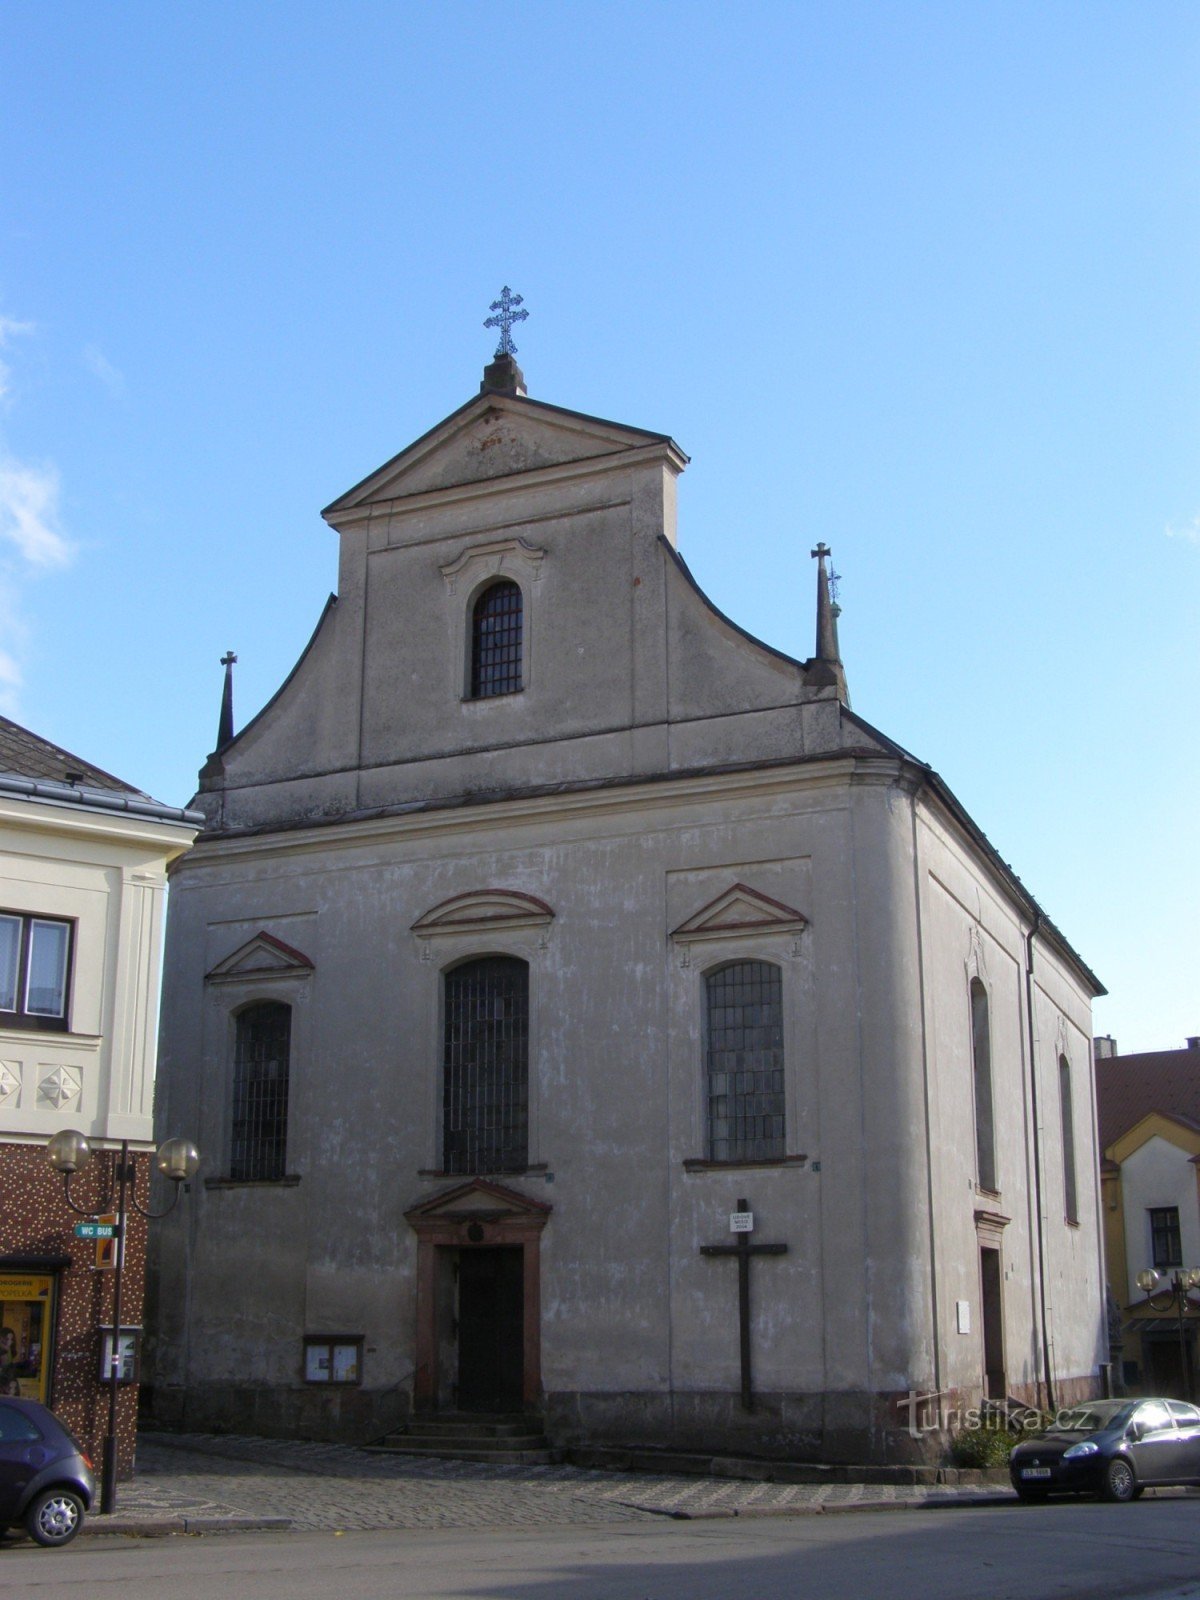 Lomnice nad Popelkou - εκκλησία του Αγ. Νικόλαος του Μπάρι